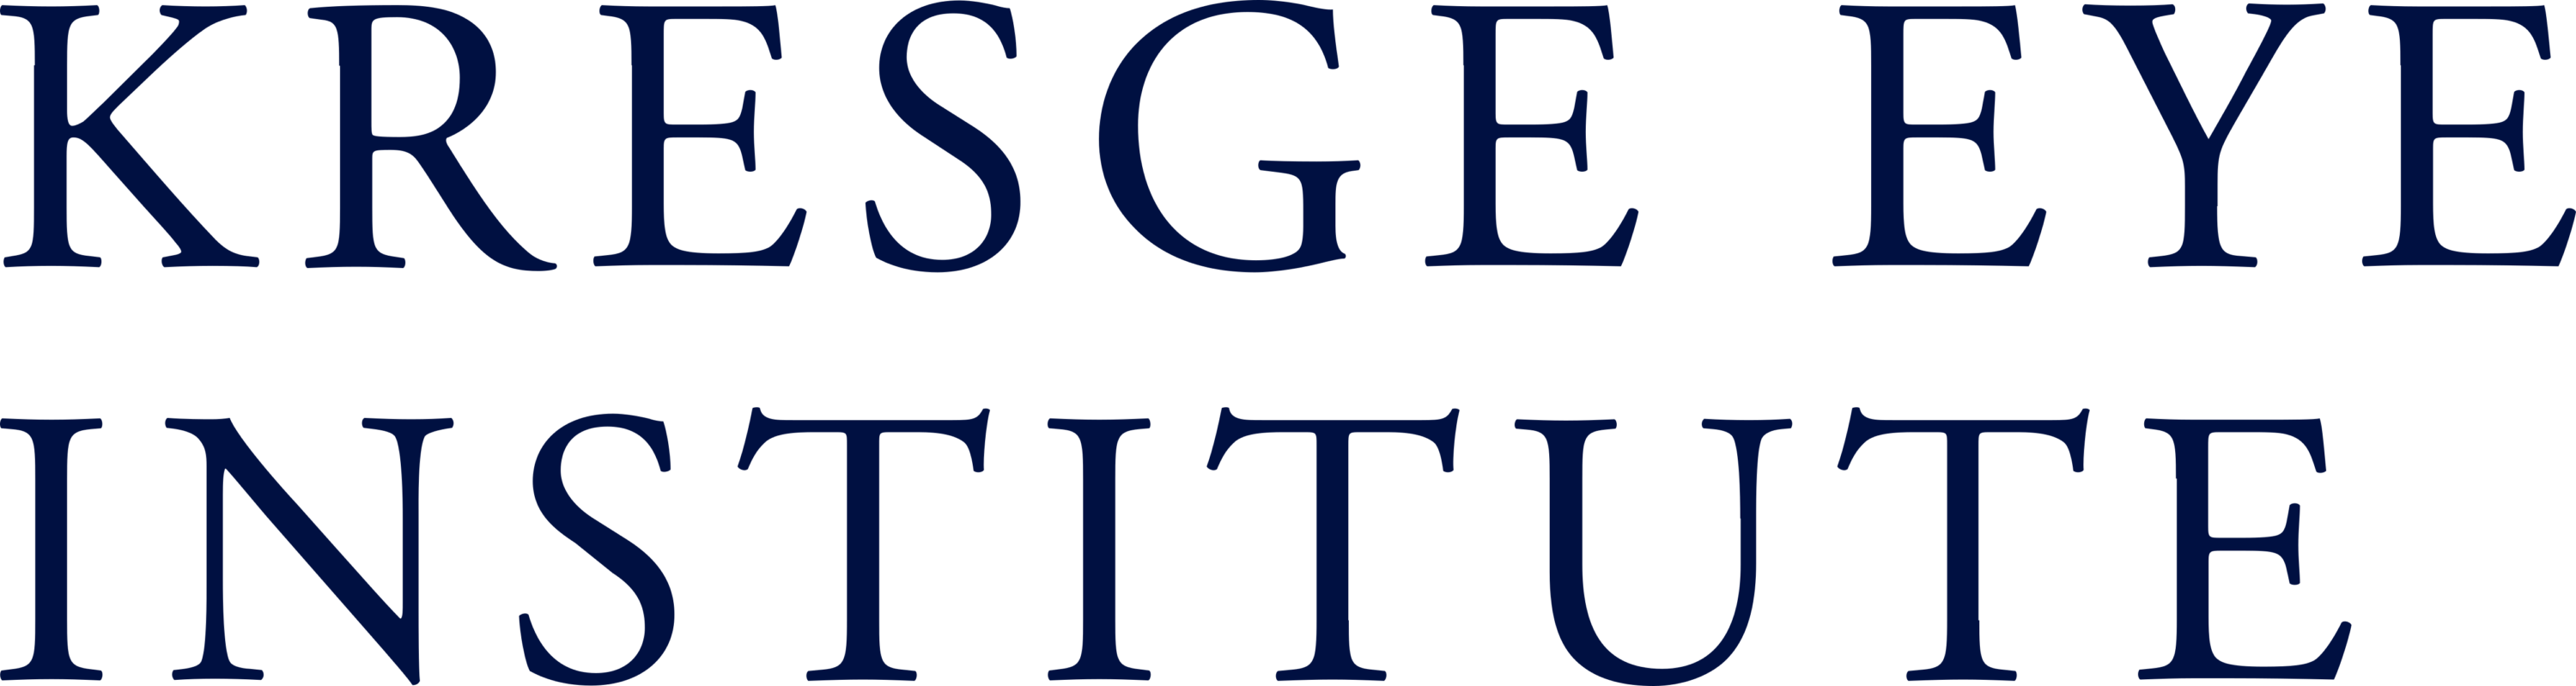 Kresge Eye Institute Logo